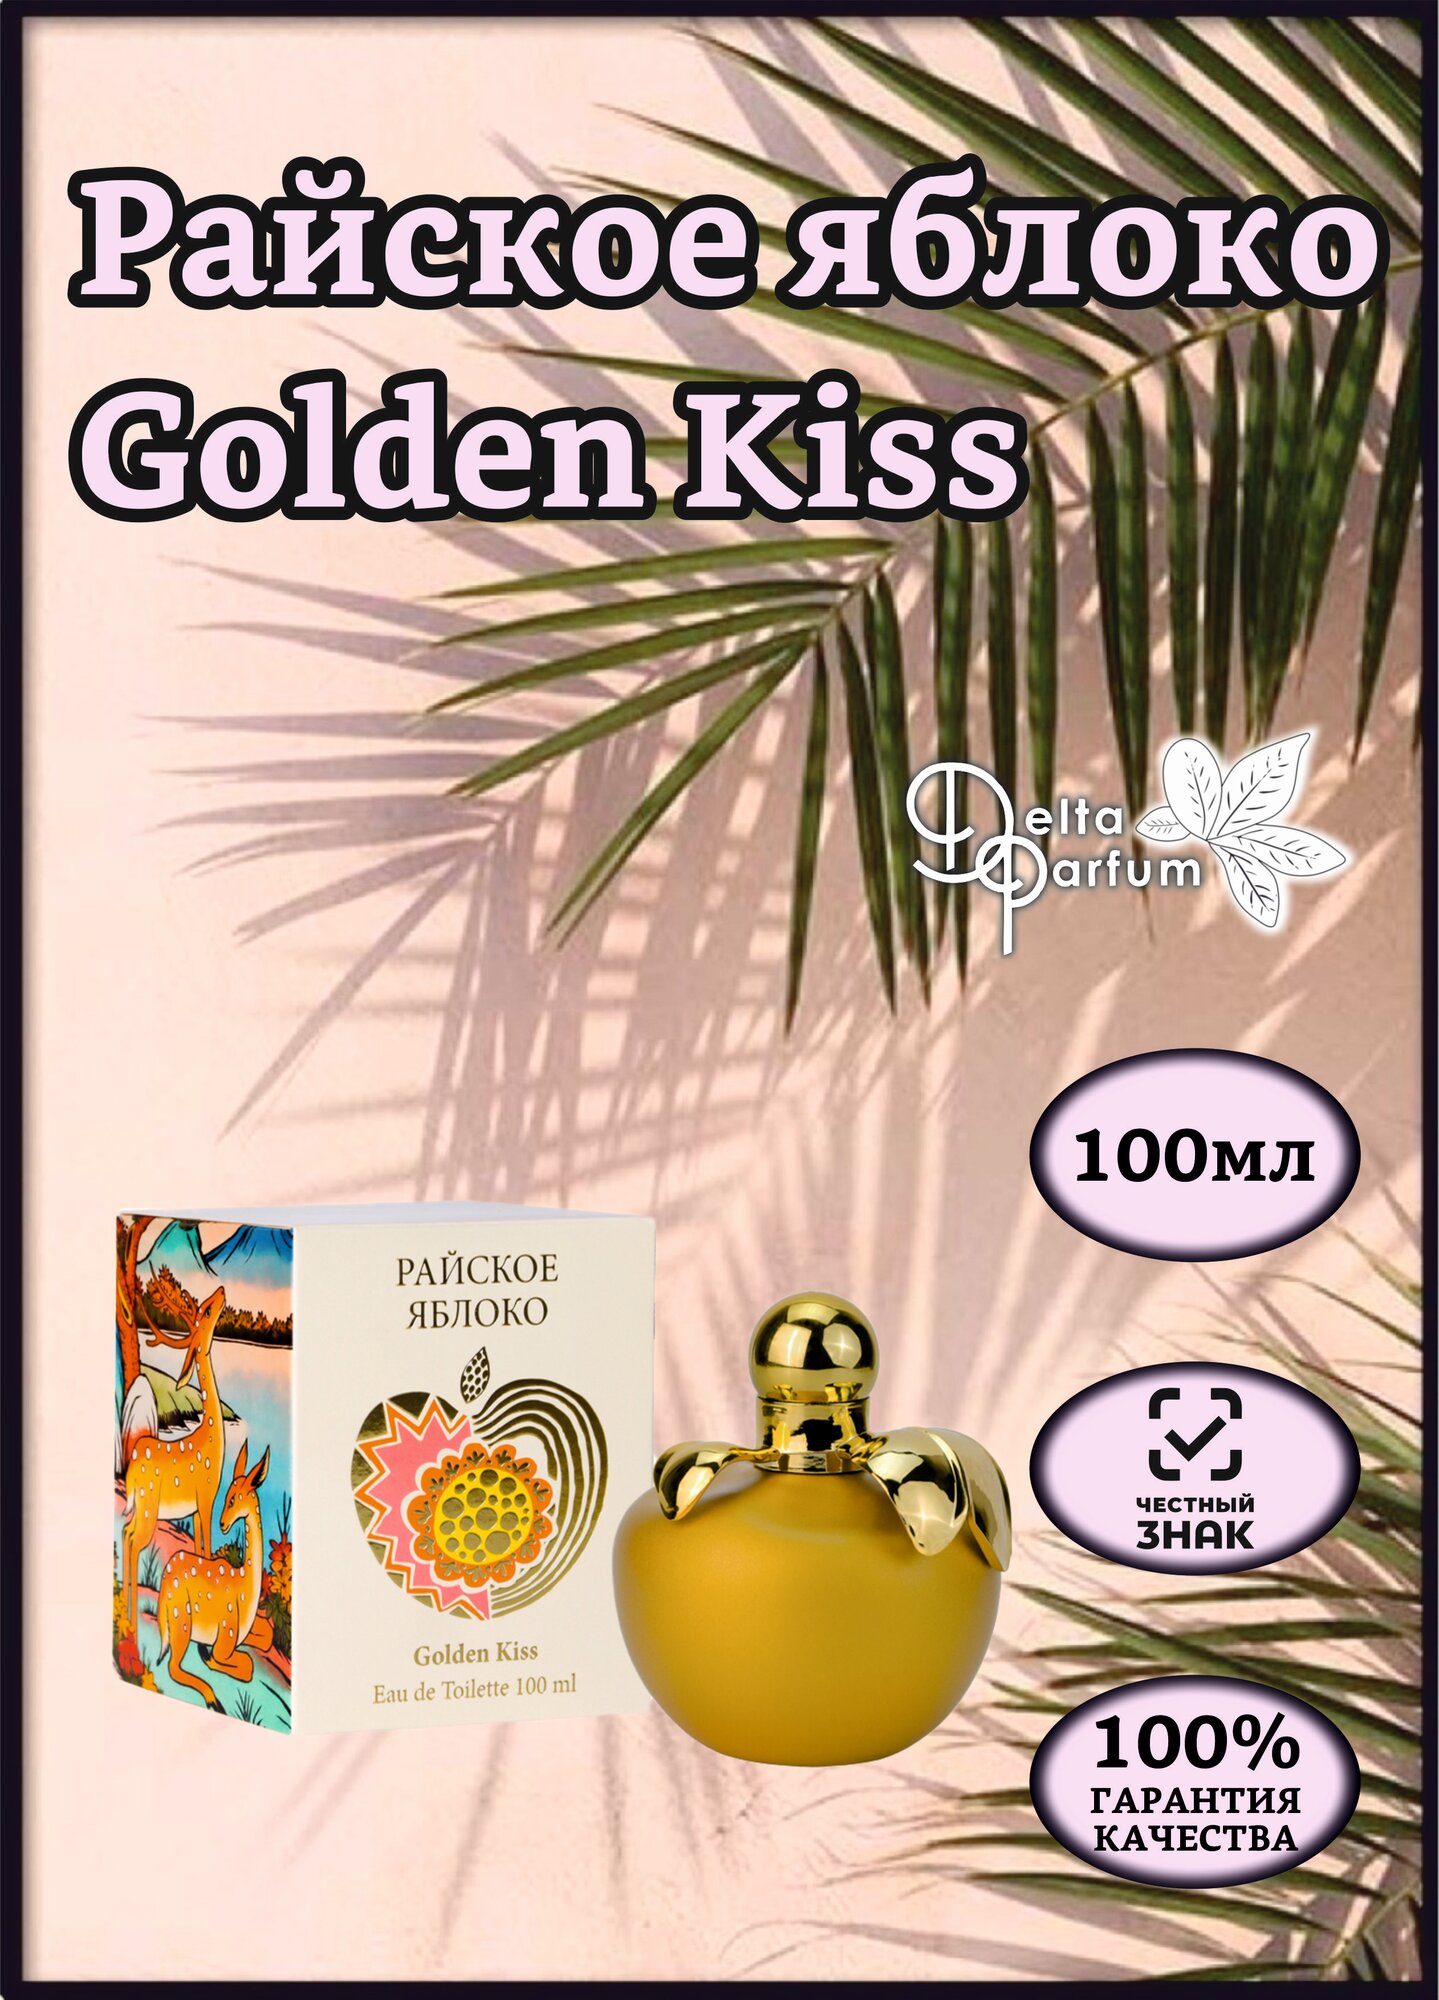 Delta parfum Туалетная вода женская Райское яблоко Golden Kiss, 100мл